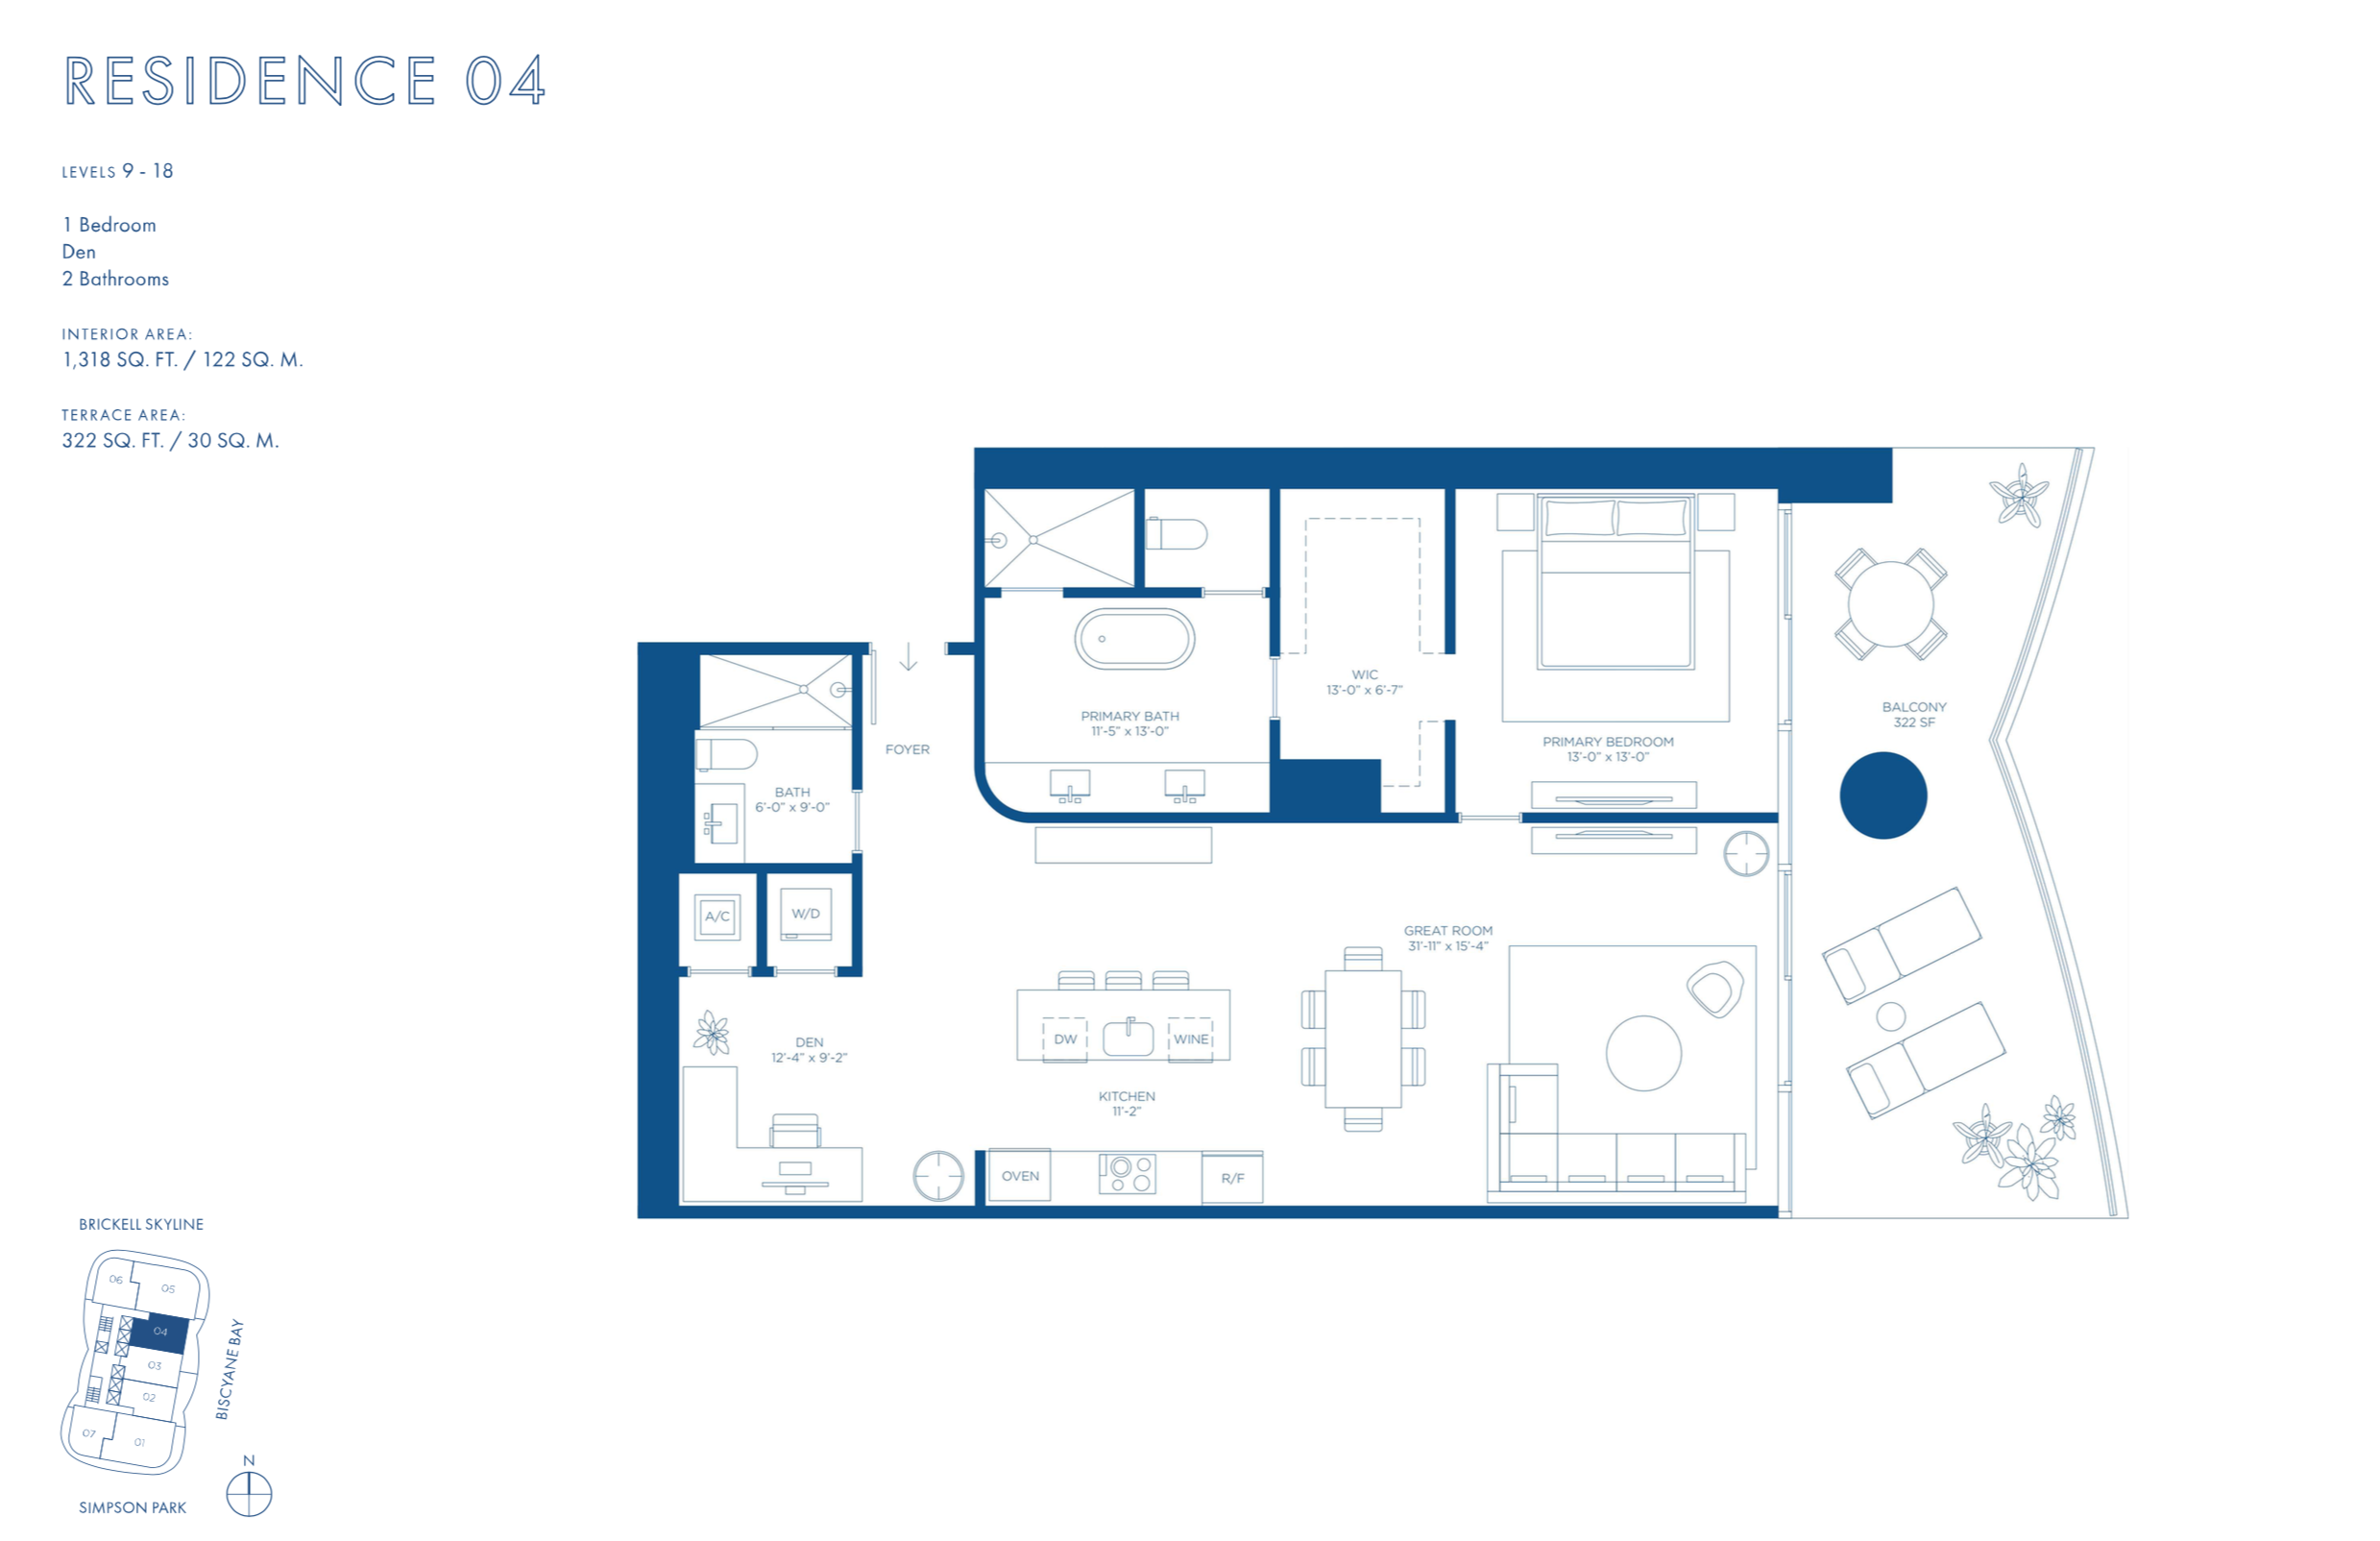 Cipriani Residences Brickell | Residence 04A | Floor 9-18  | 1 Be + Den/2 Ba | 1,318 SF